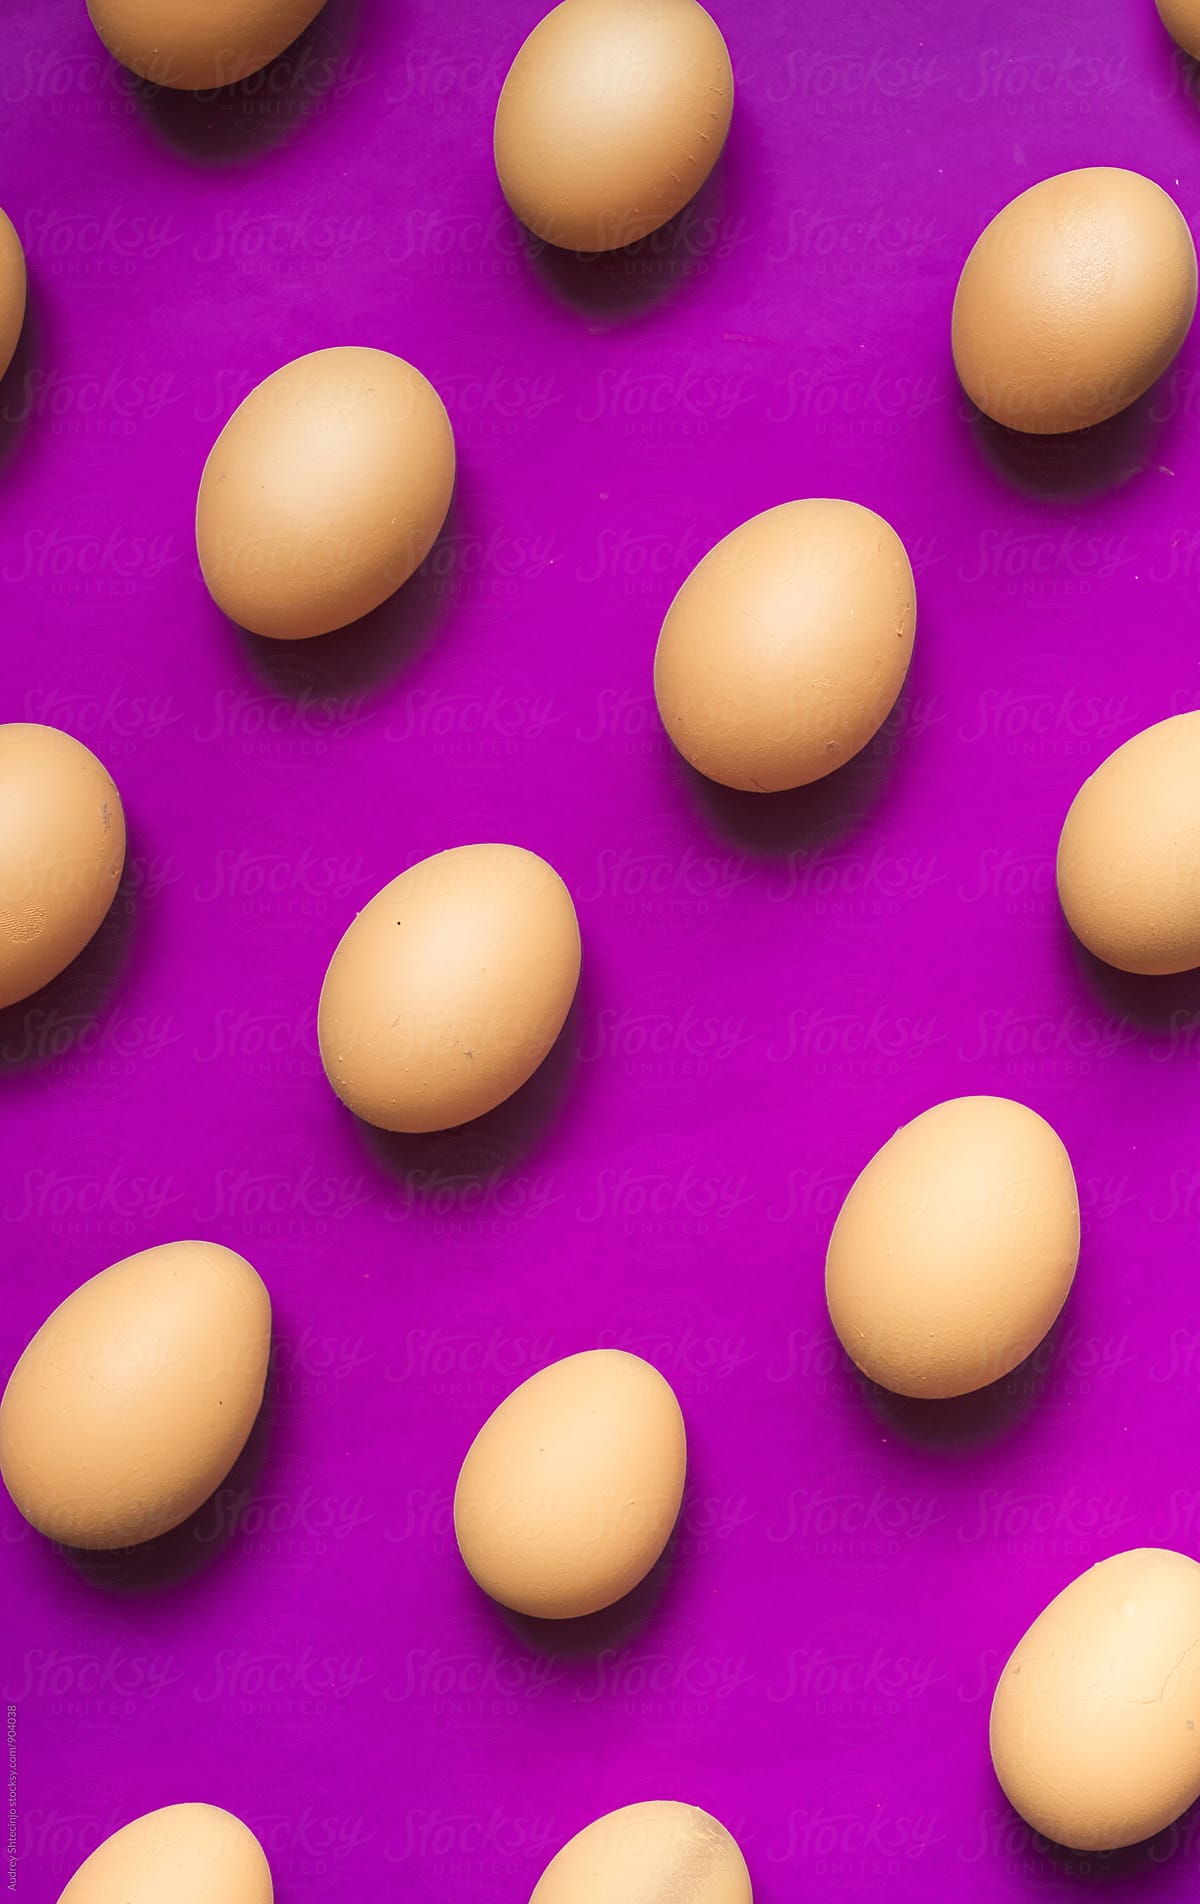 Well arranged raw/hardboiled eggs on purple background.